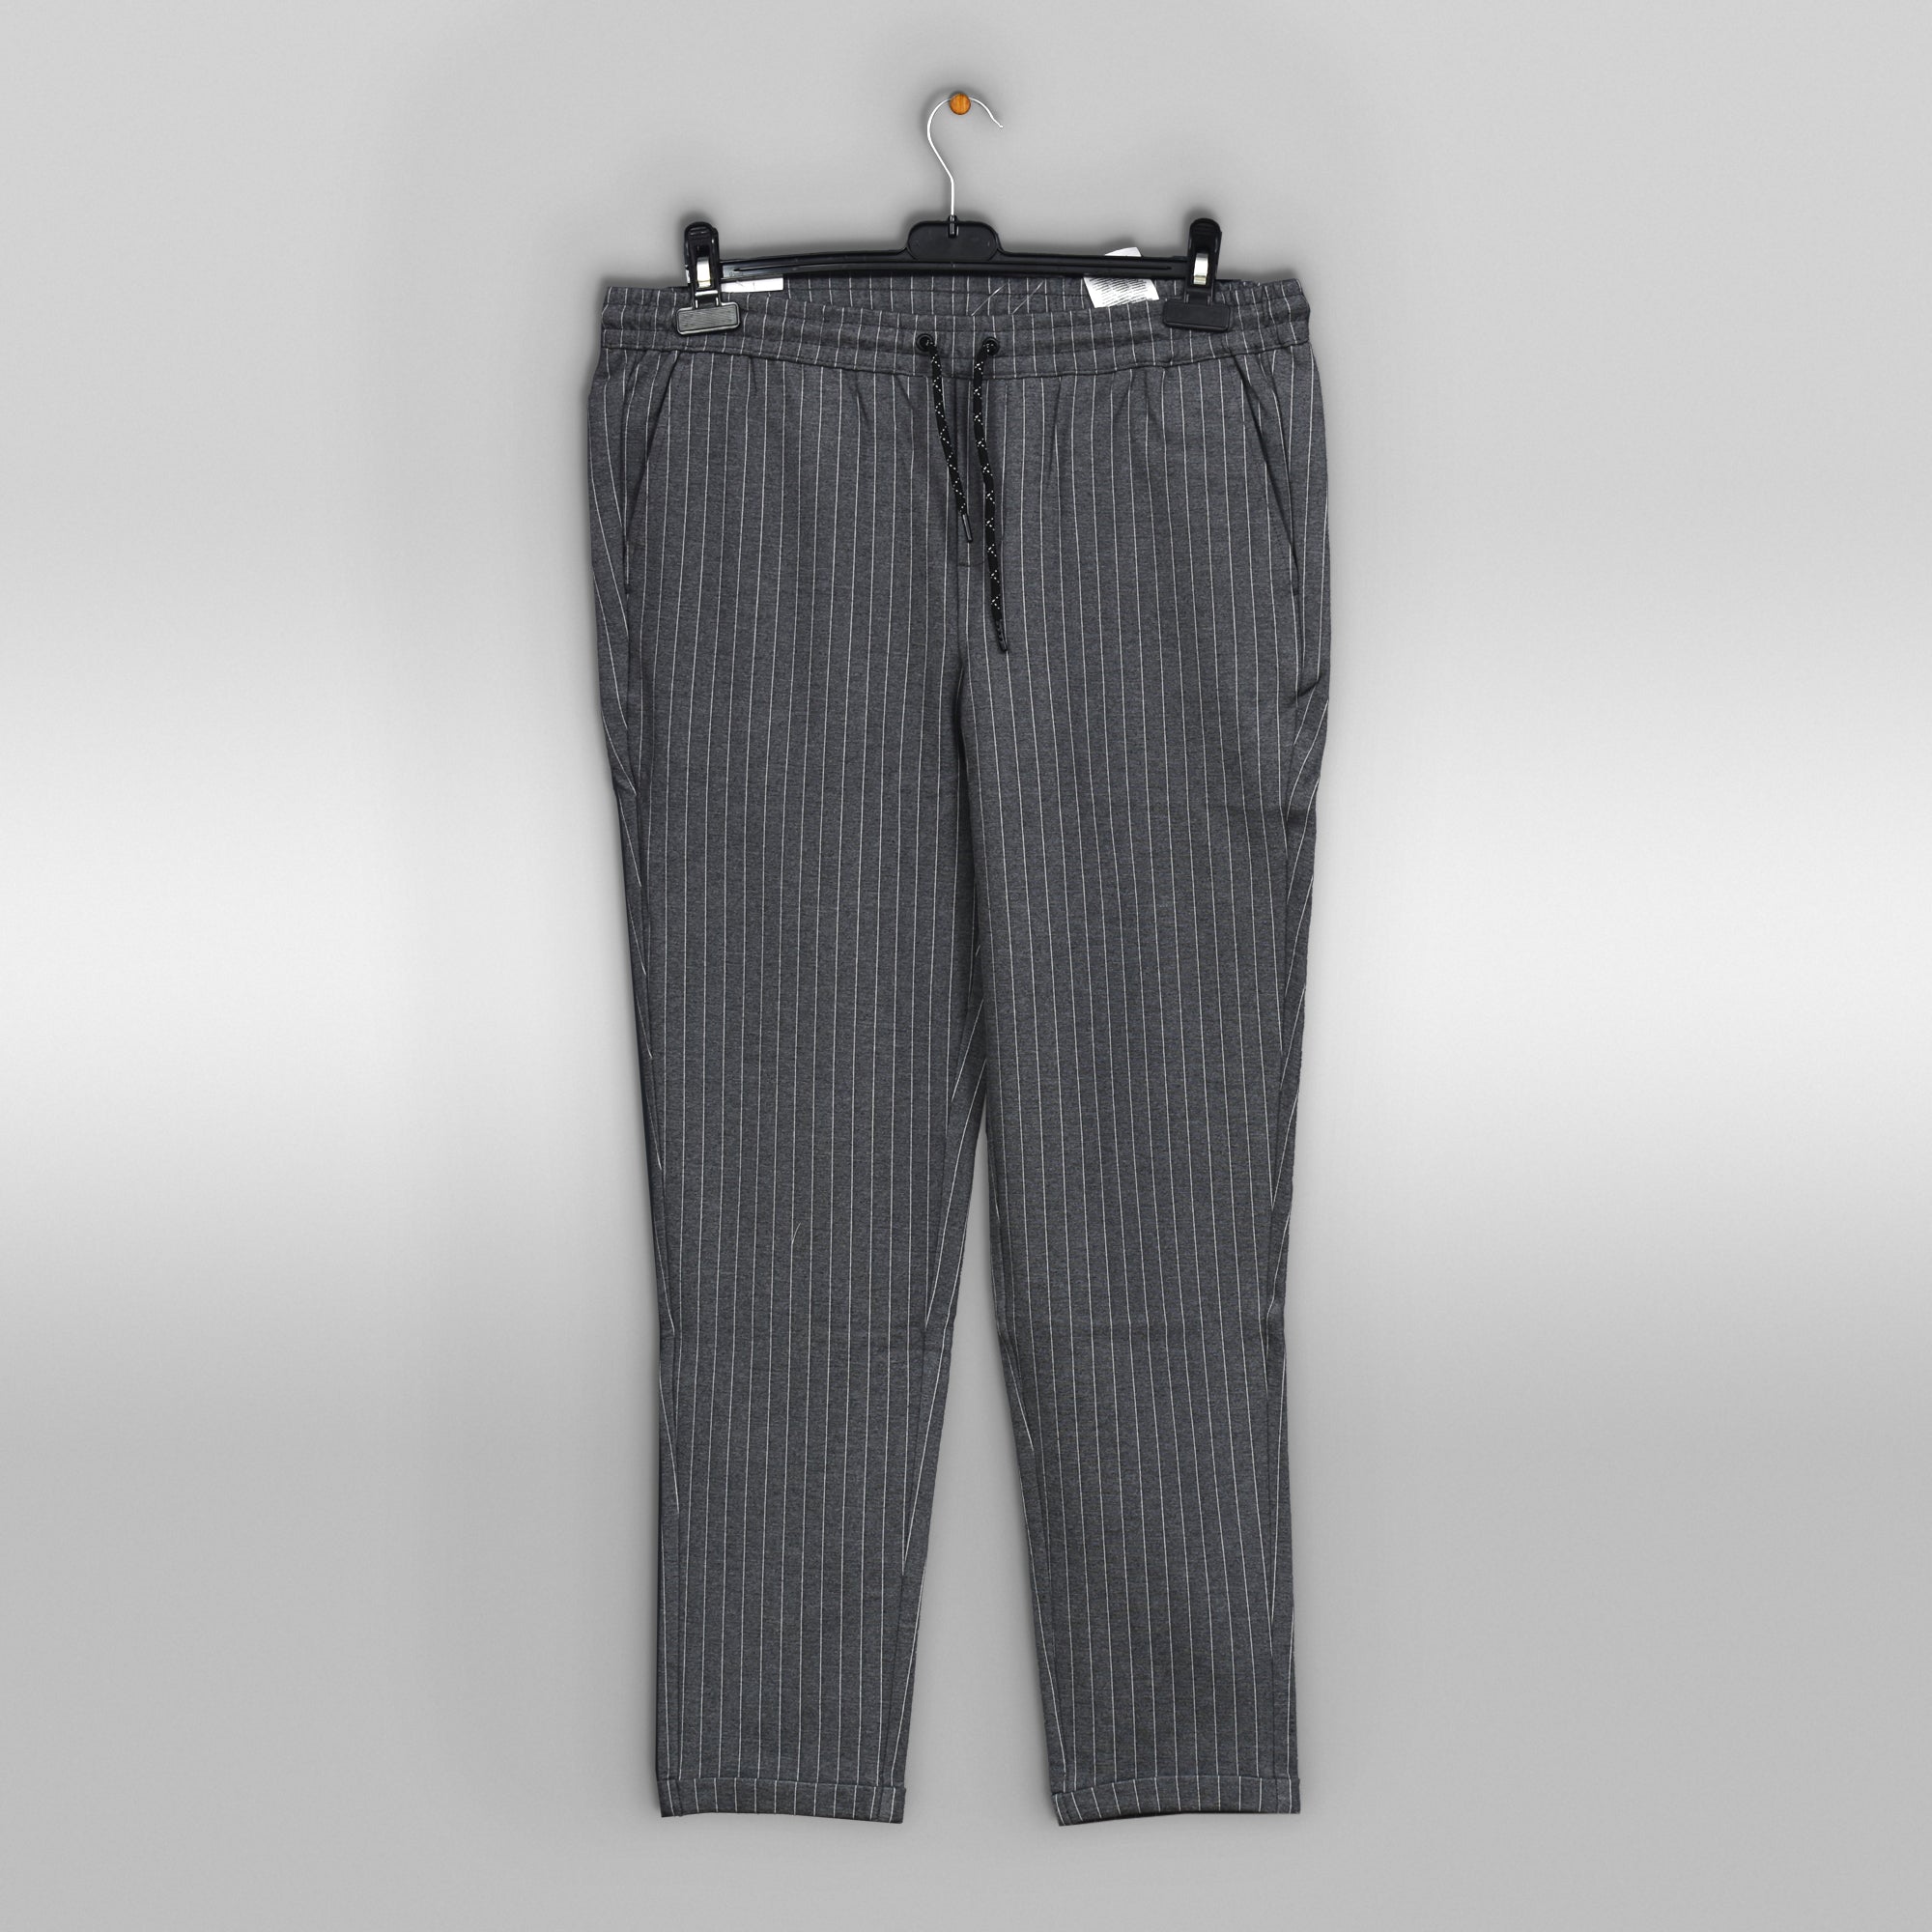 Trouser Pant 05